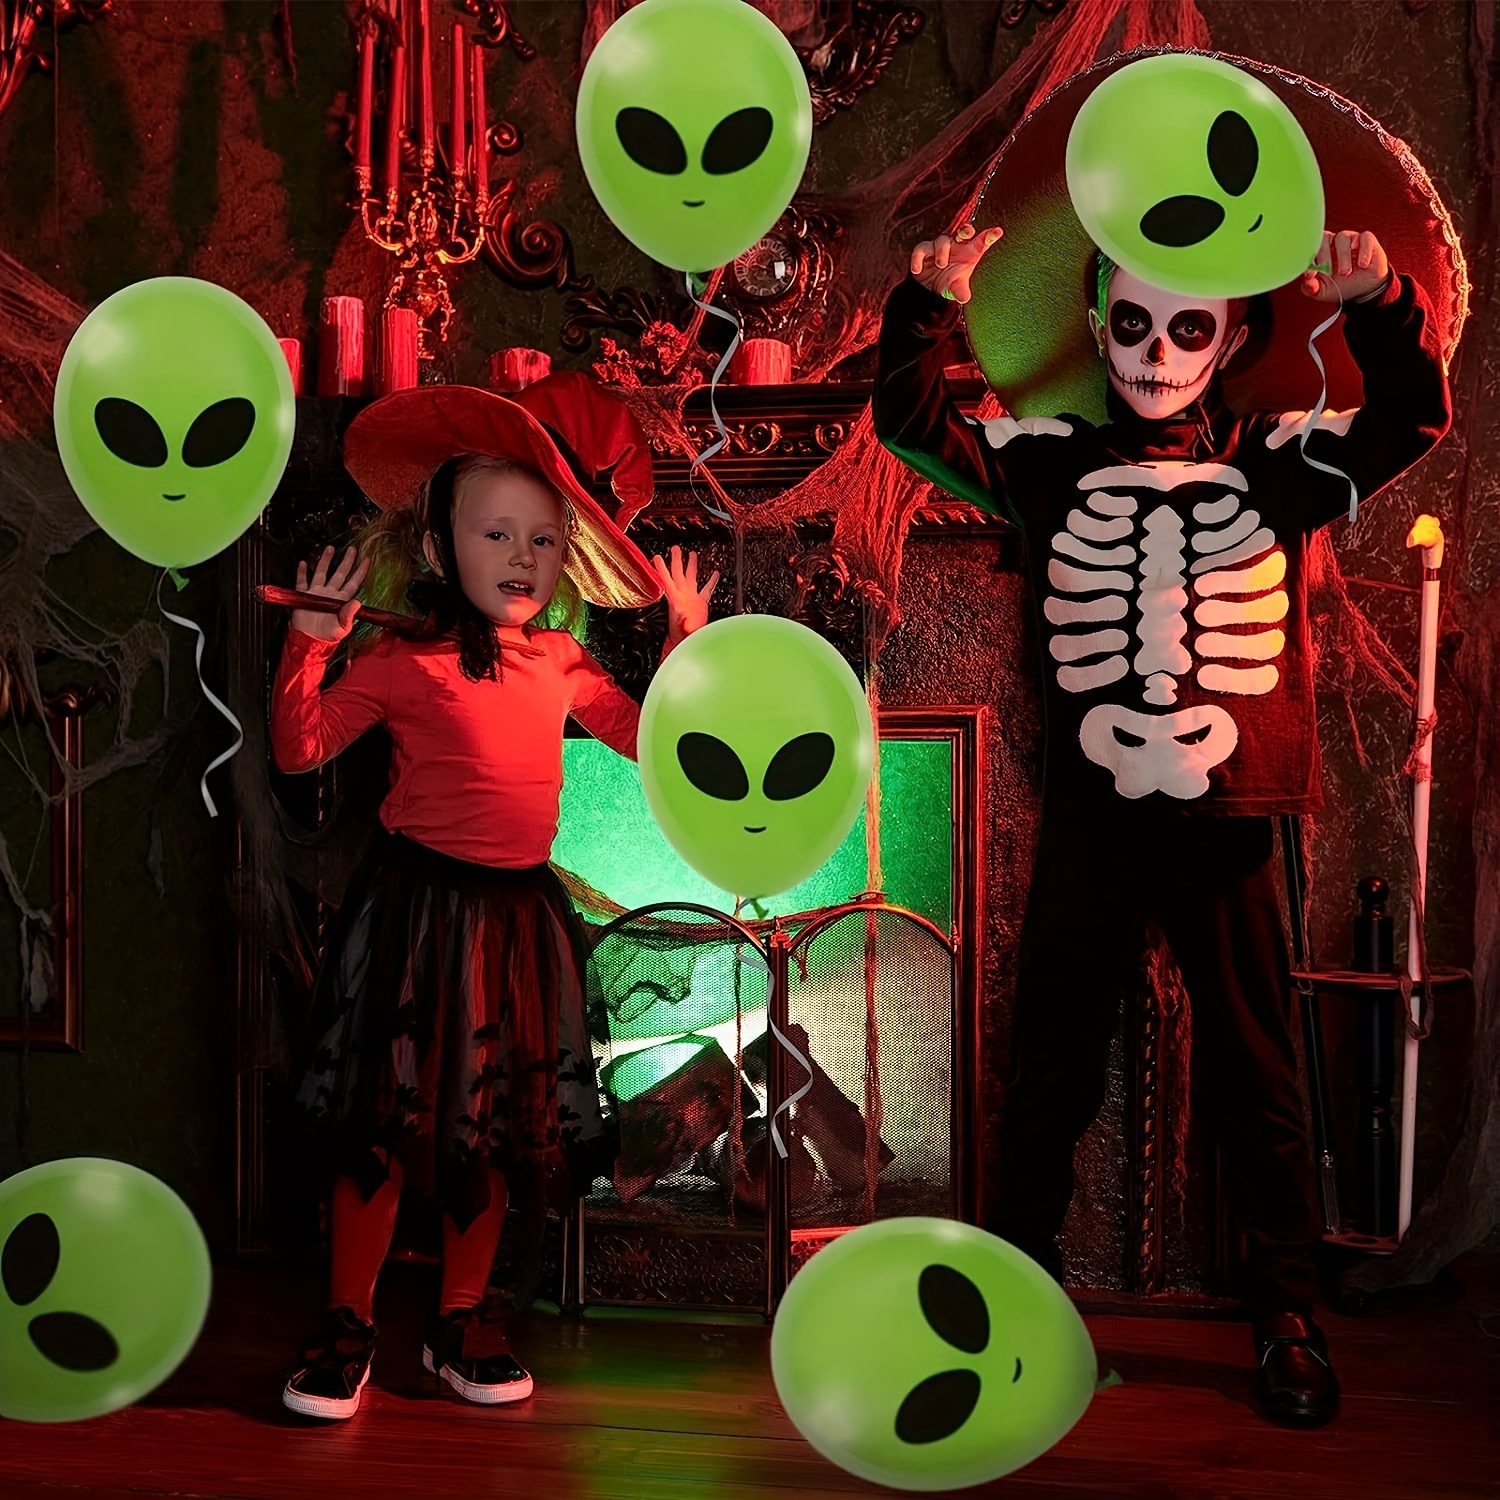 2 globos alienígenas verdes inflables extraterrestres Jumbo Alien inflan  juguete para decoraciones de fiesta, cumpleaños, Halloween, fiesta temática  extraterrestre JM